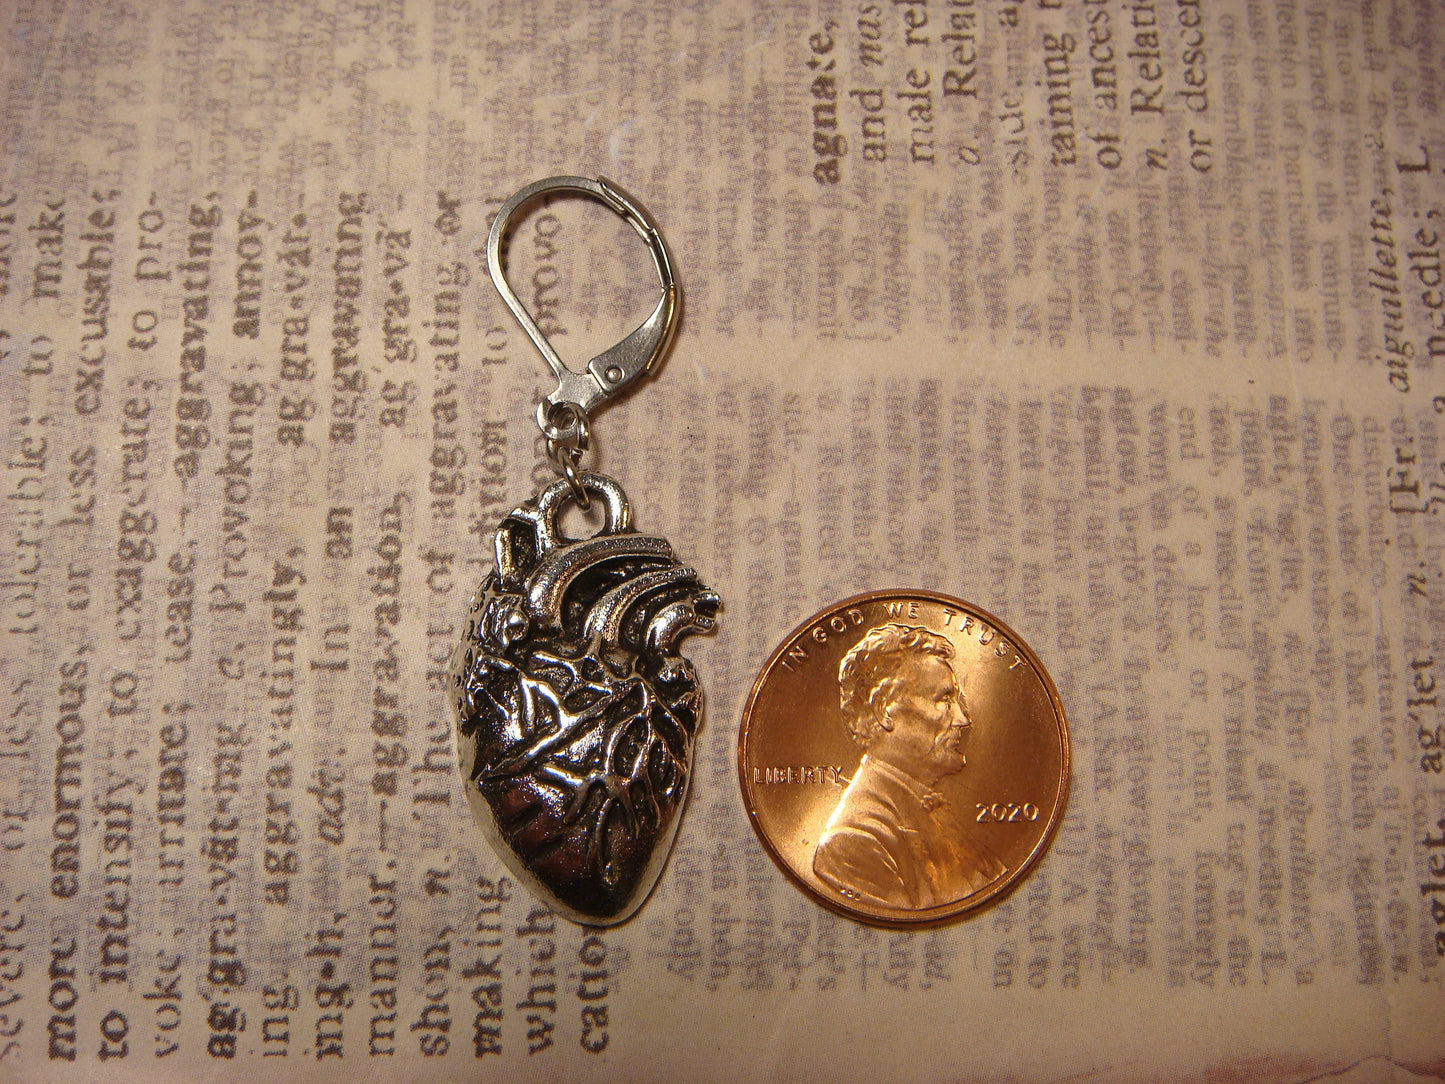 Anatomical Heart Dangle Earrings in Antique Silver